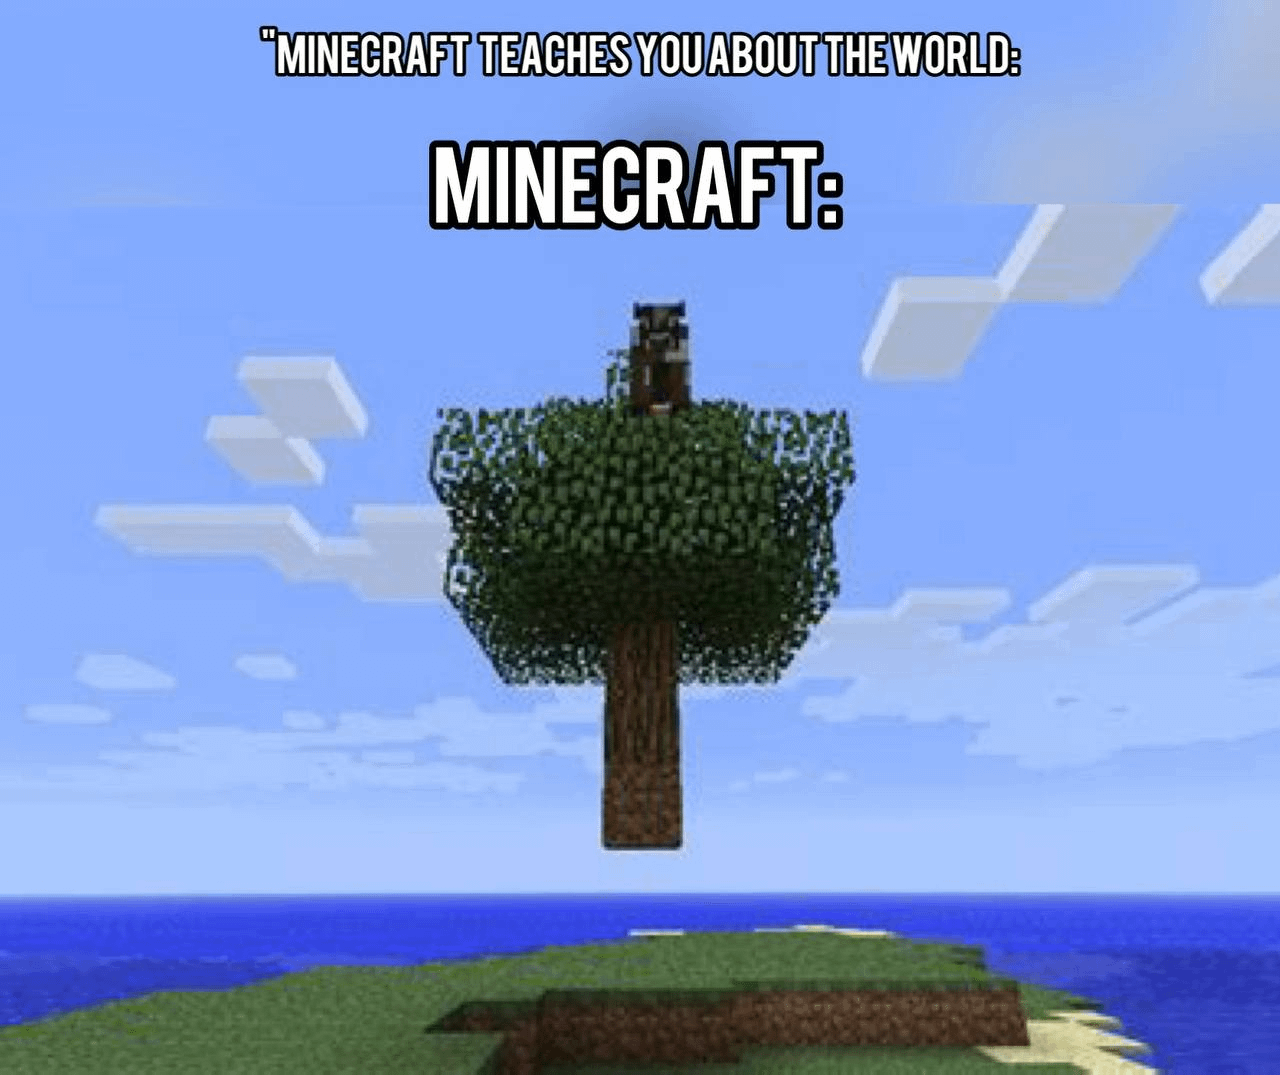 Minecraft Memes - "Minecraft: The Game I Love"